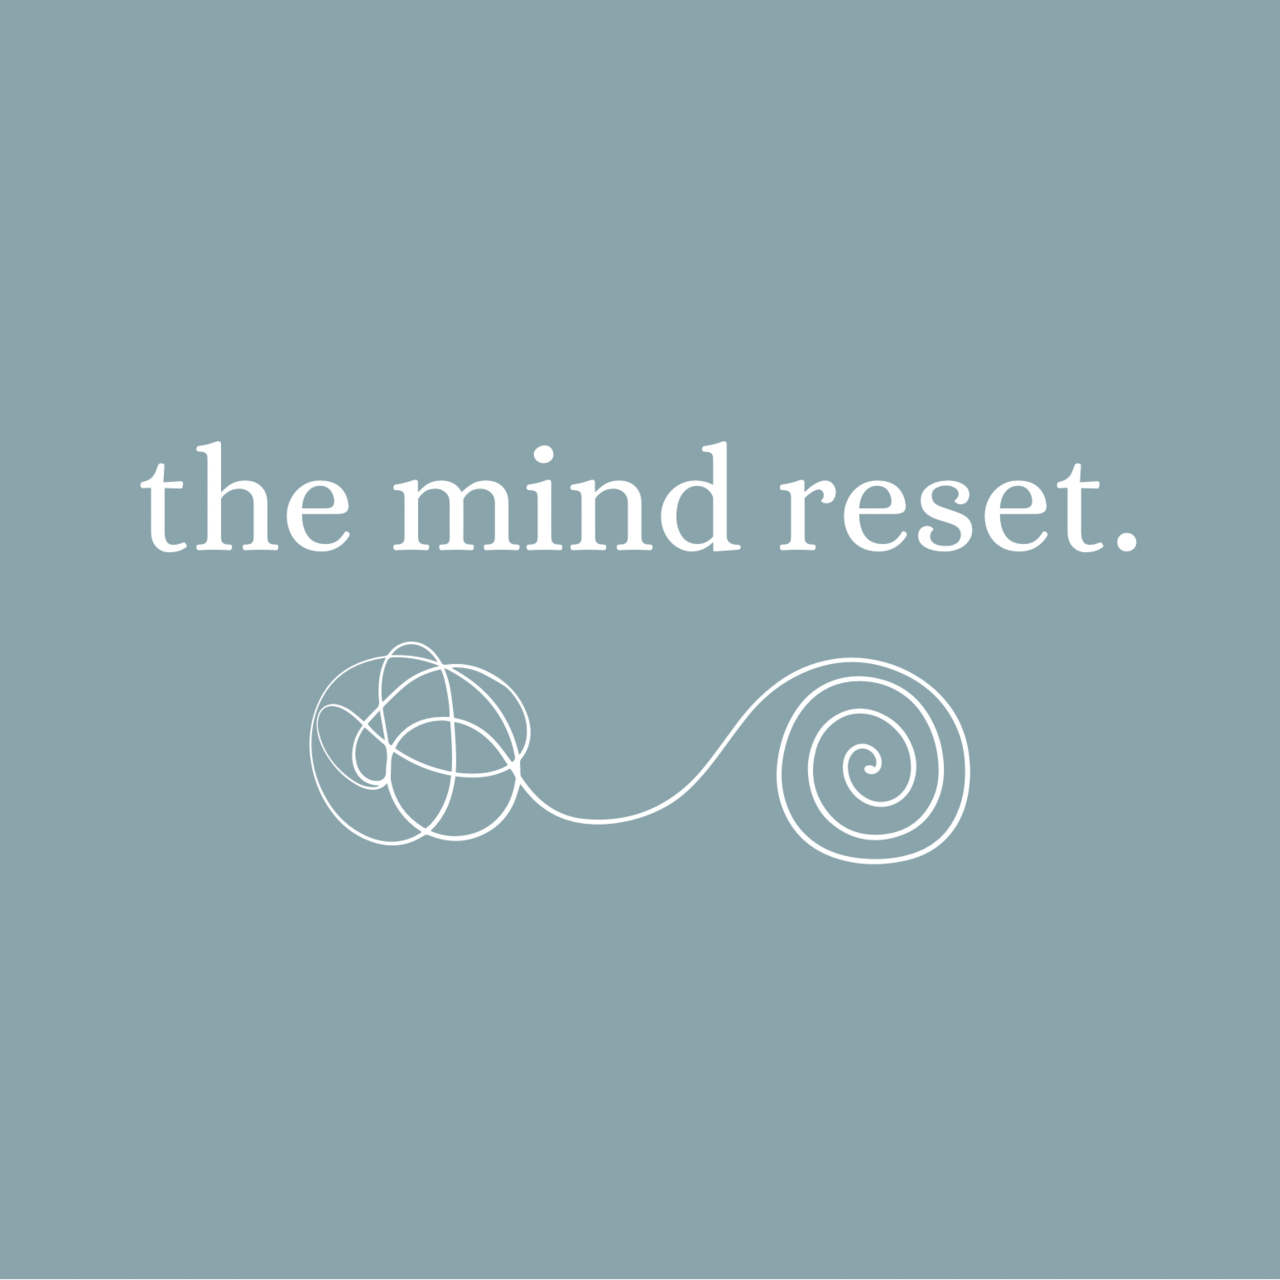 the mind reset. 